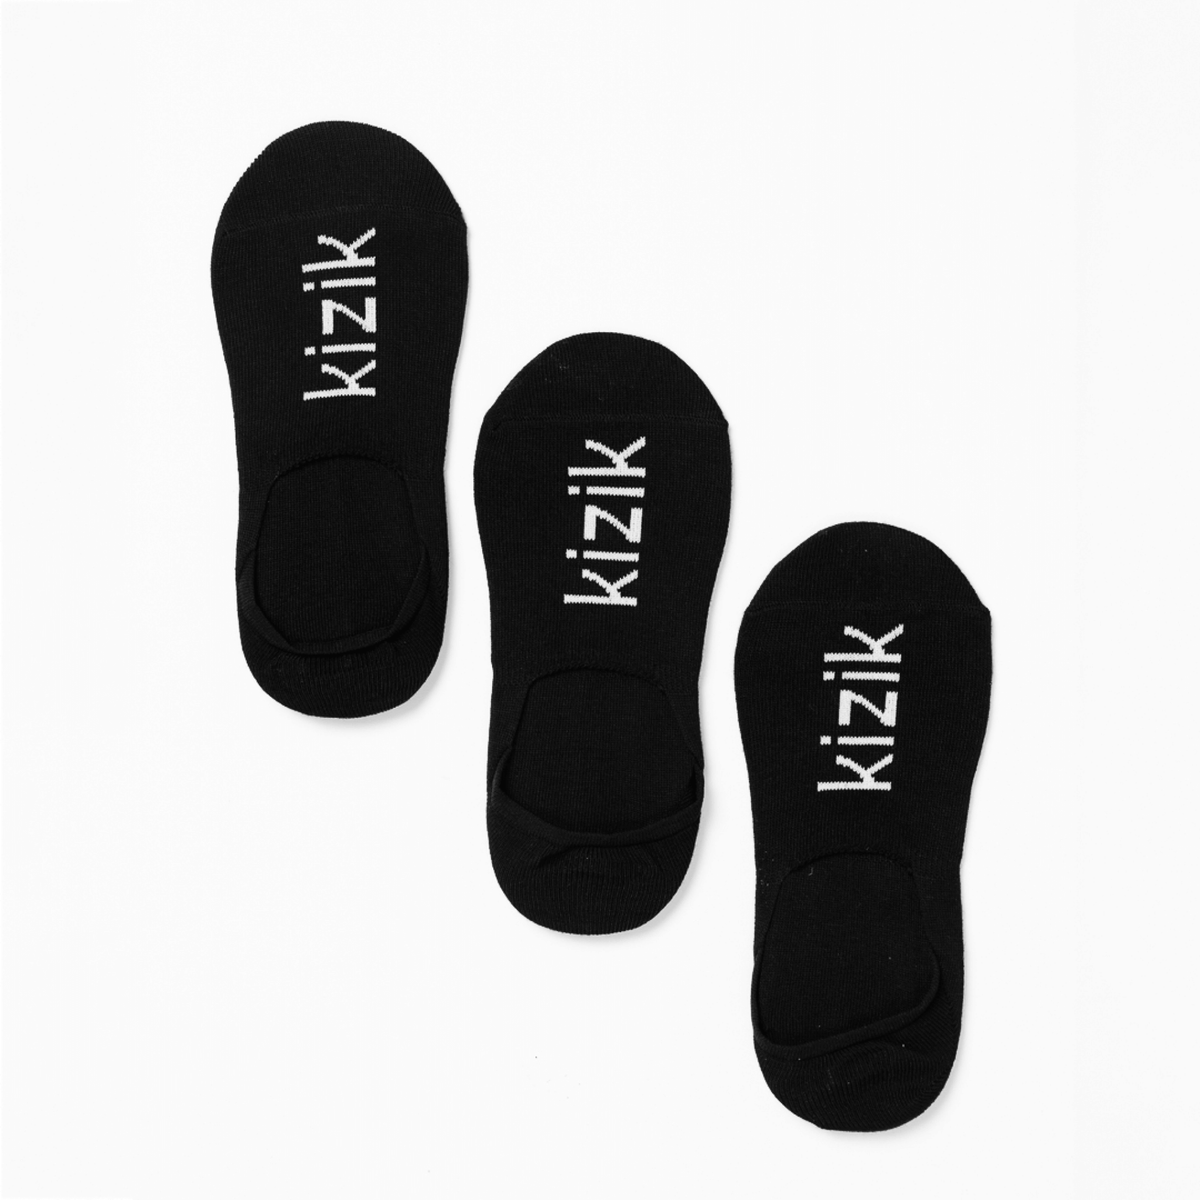 Kizik No Show Socks - Black - 3 Pack